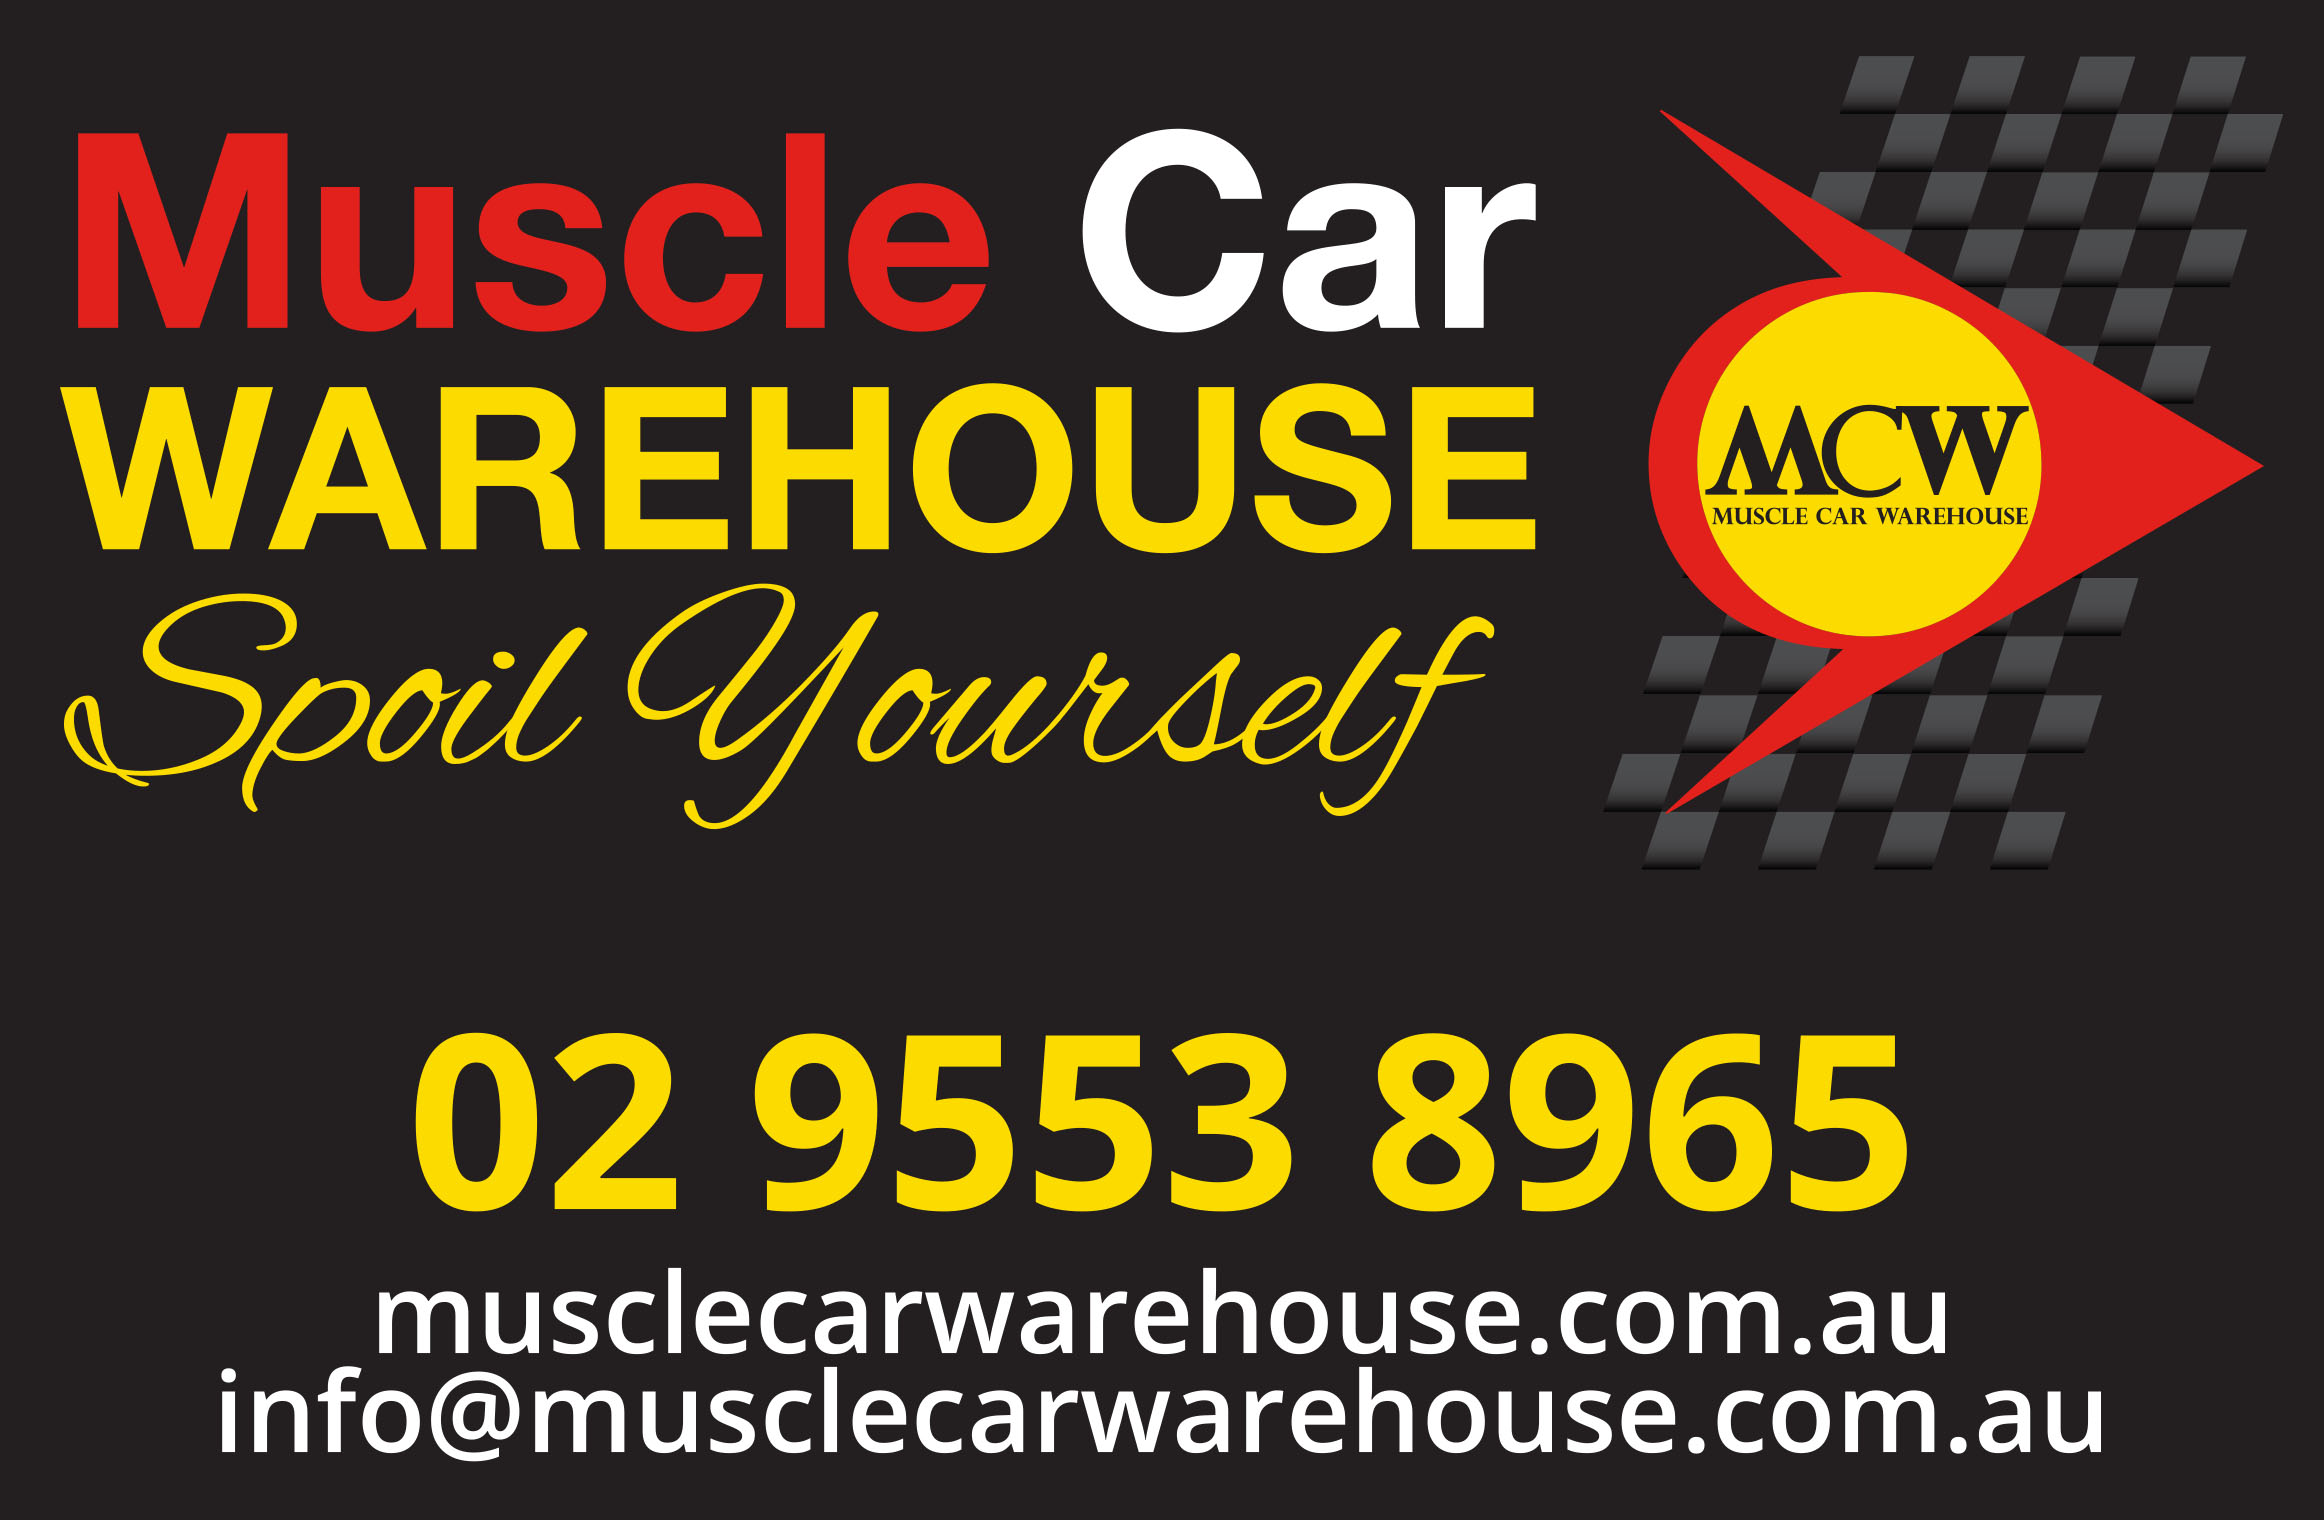 Muscle Car Warehouse Print